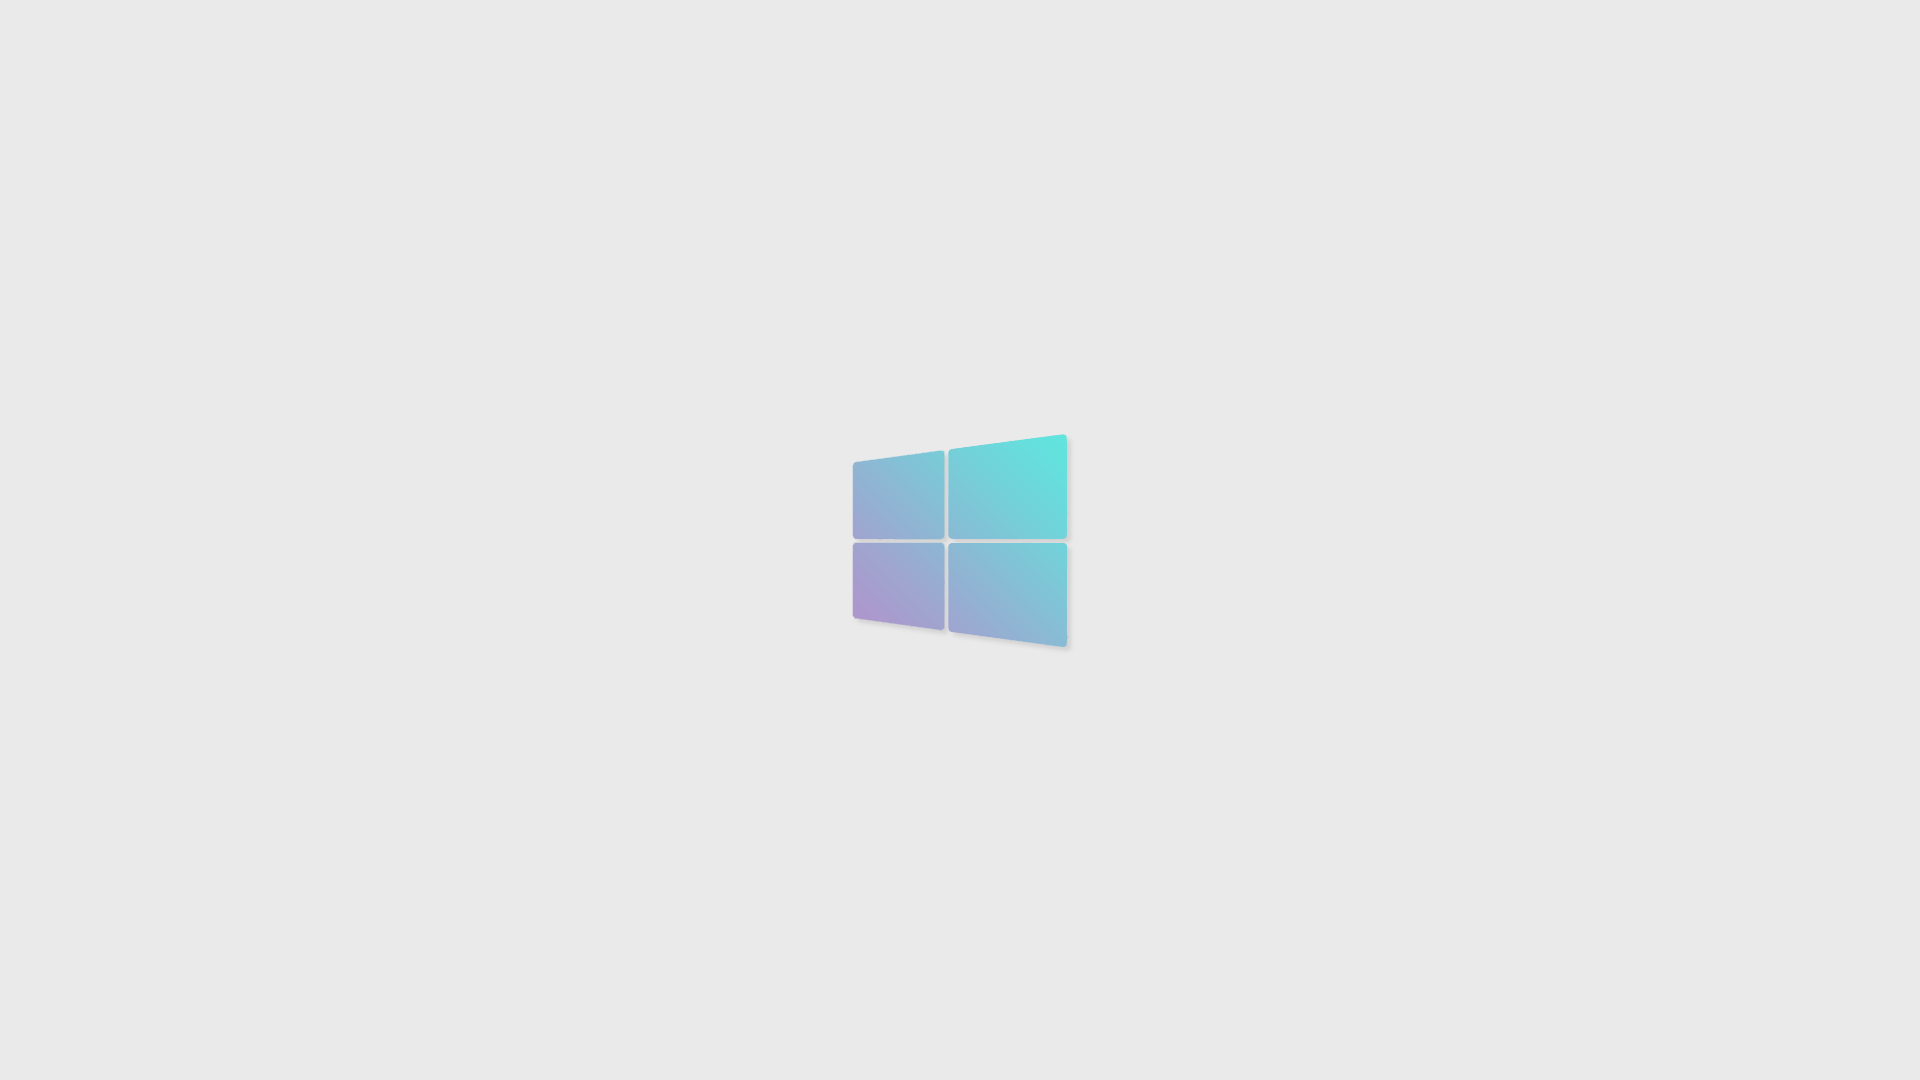 Windows 10 Simple Wallpaper - Resolution:1920x1080 - ID:1224776